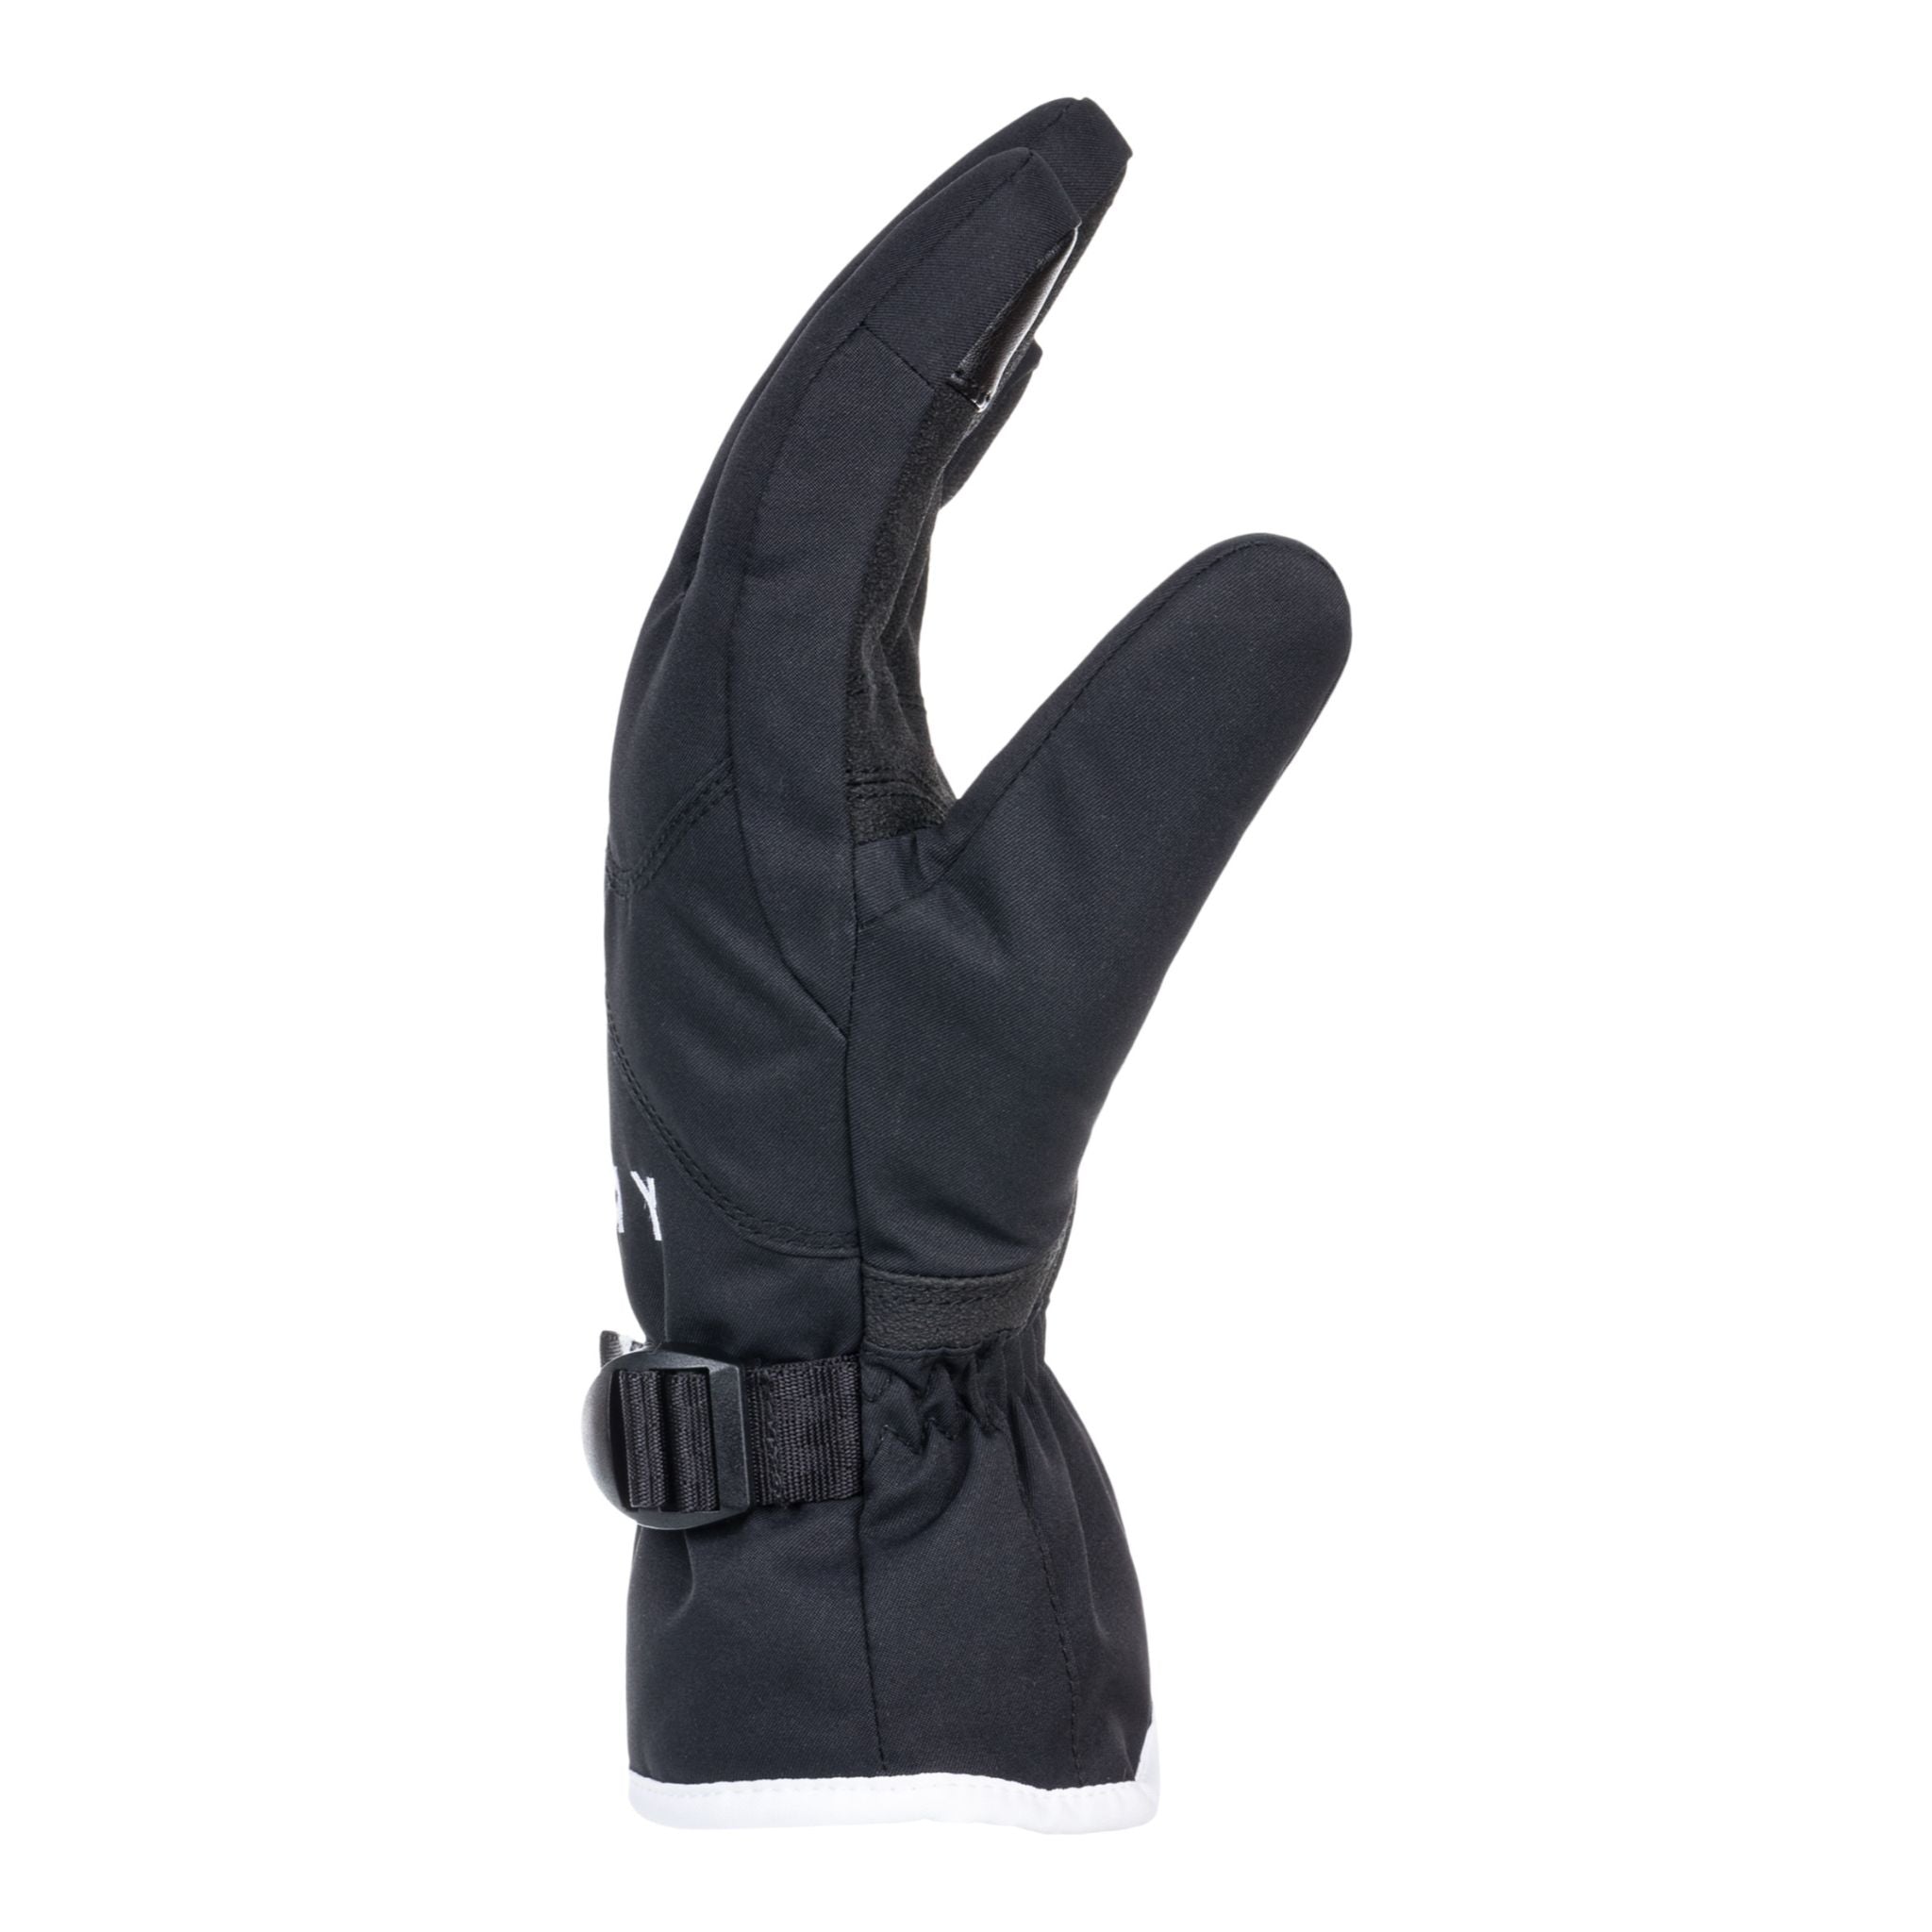 Roxy Jetty Solid Gloves